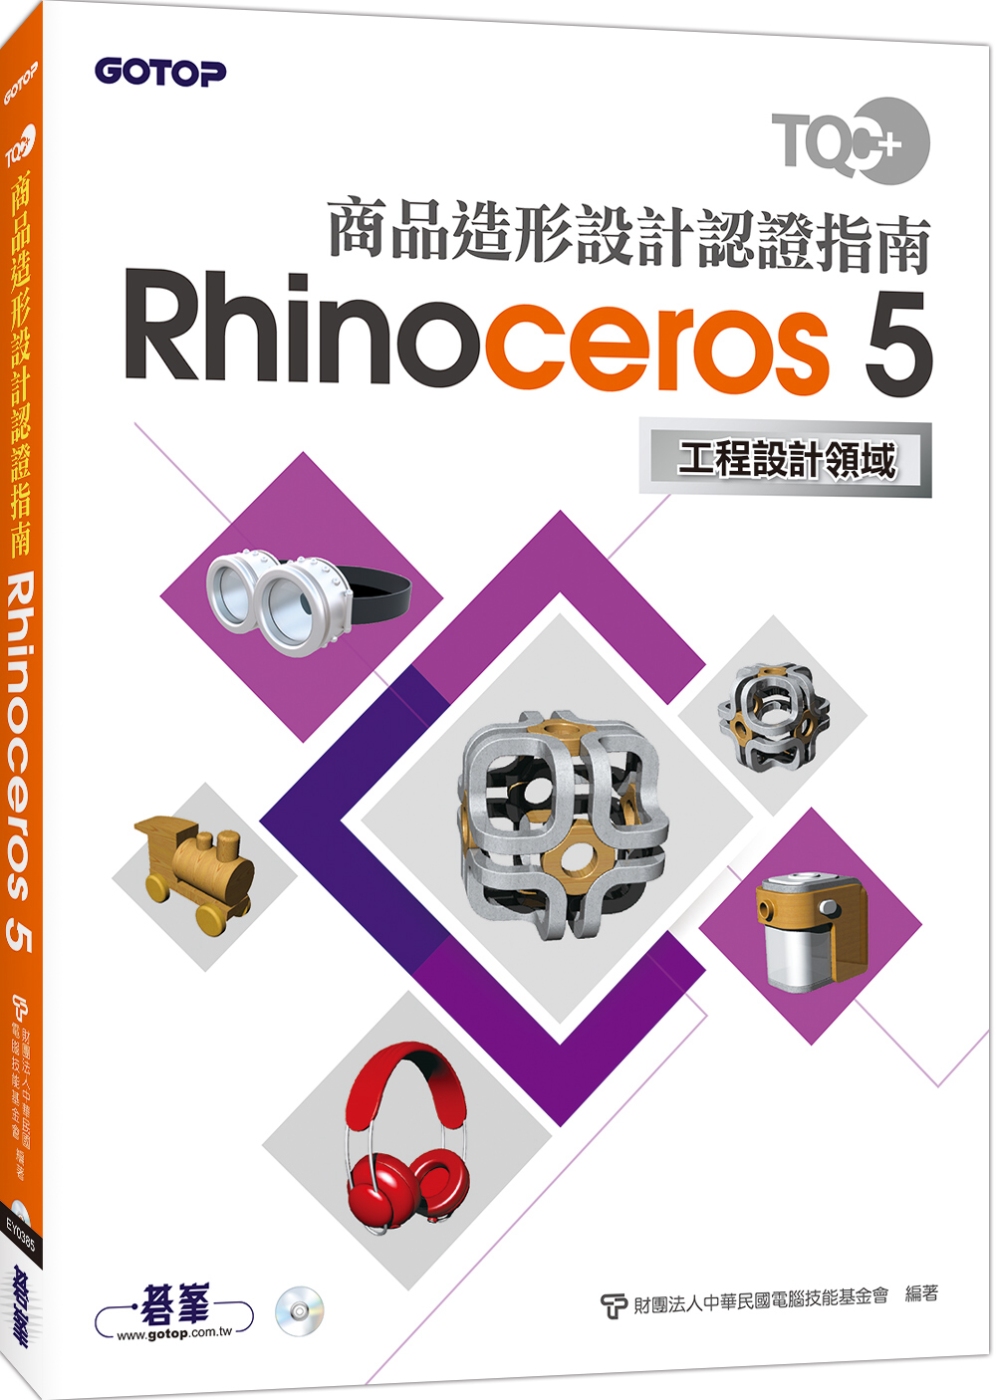 TQC+ 商品造形設計認證指南 Rhinoceros 5